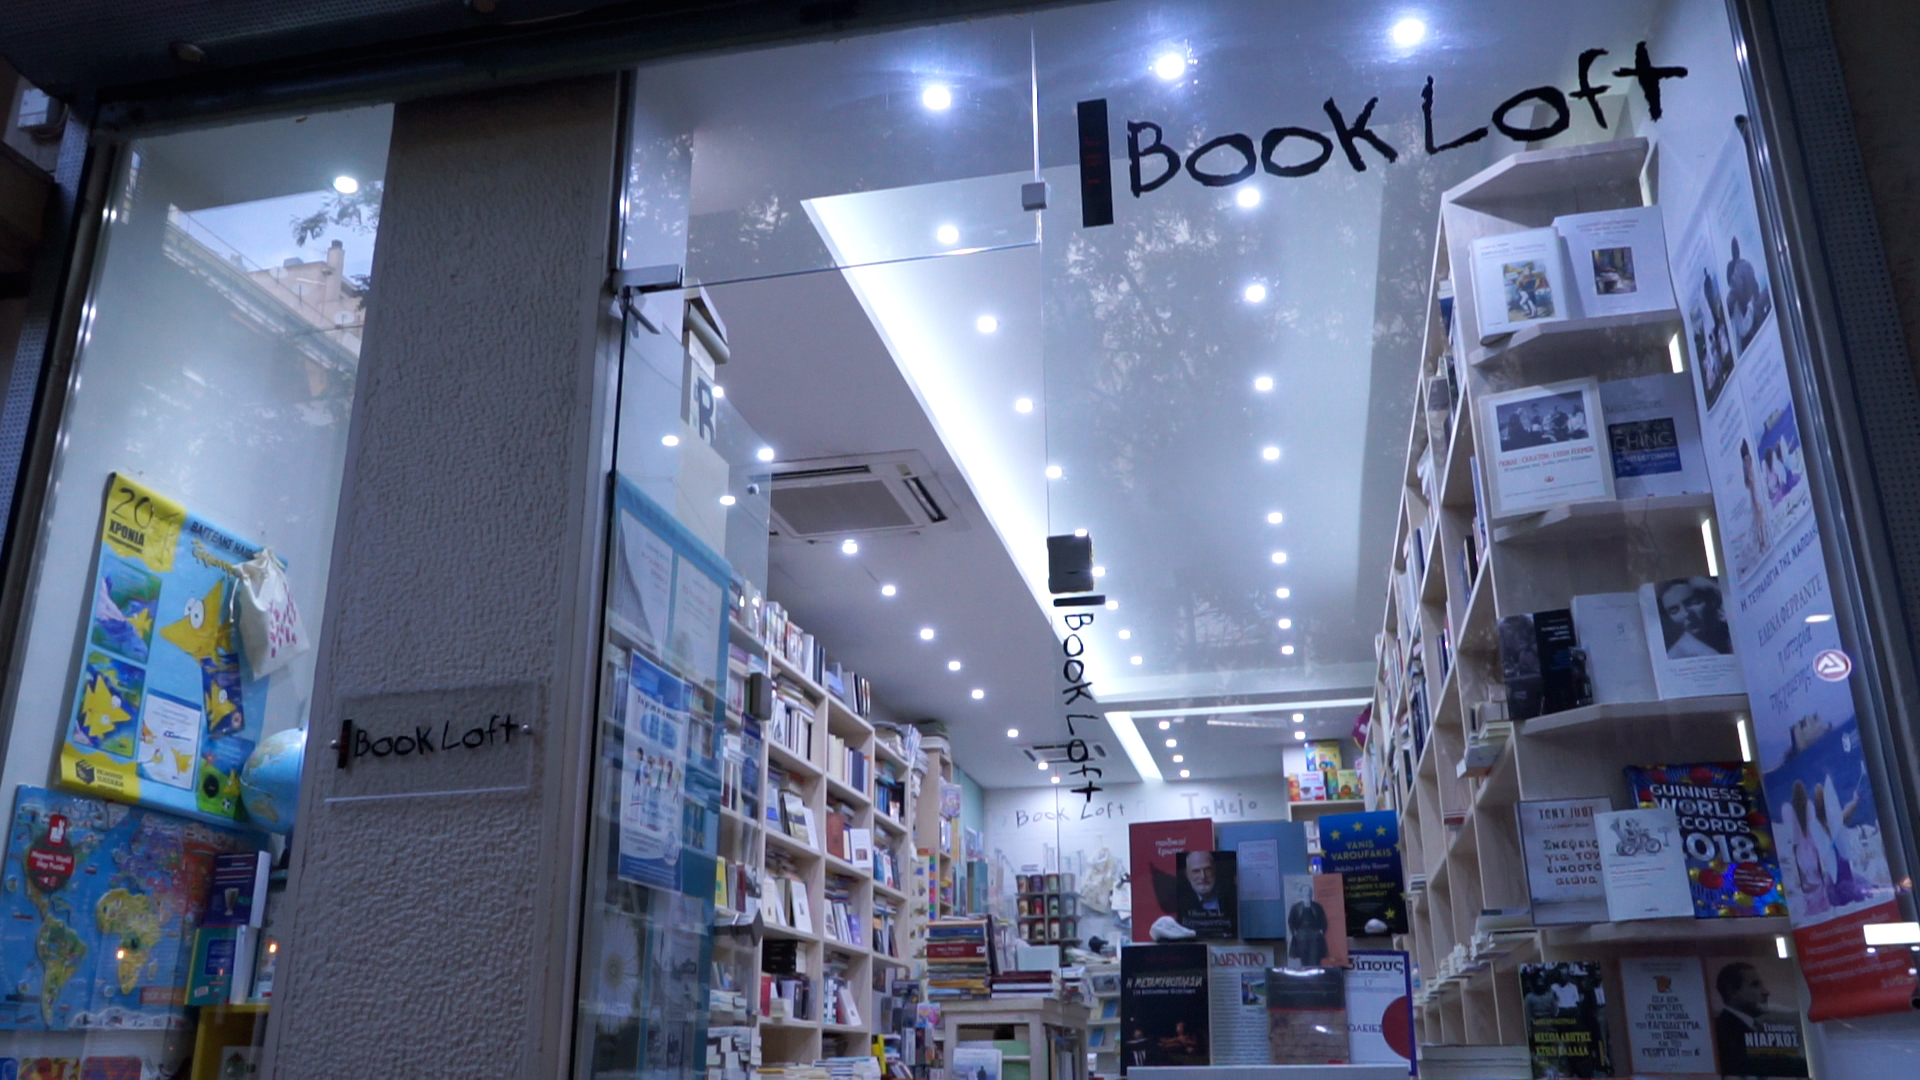 book loft